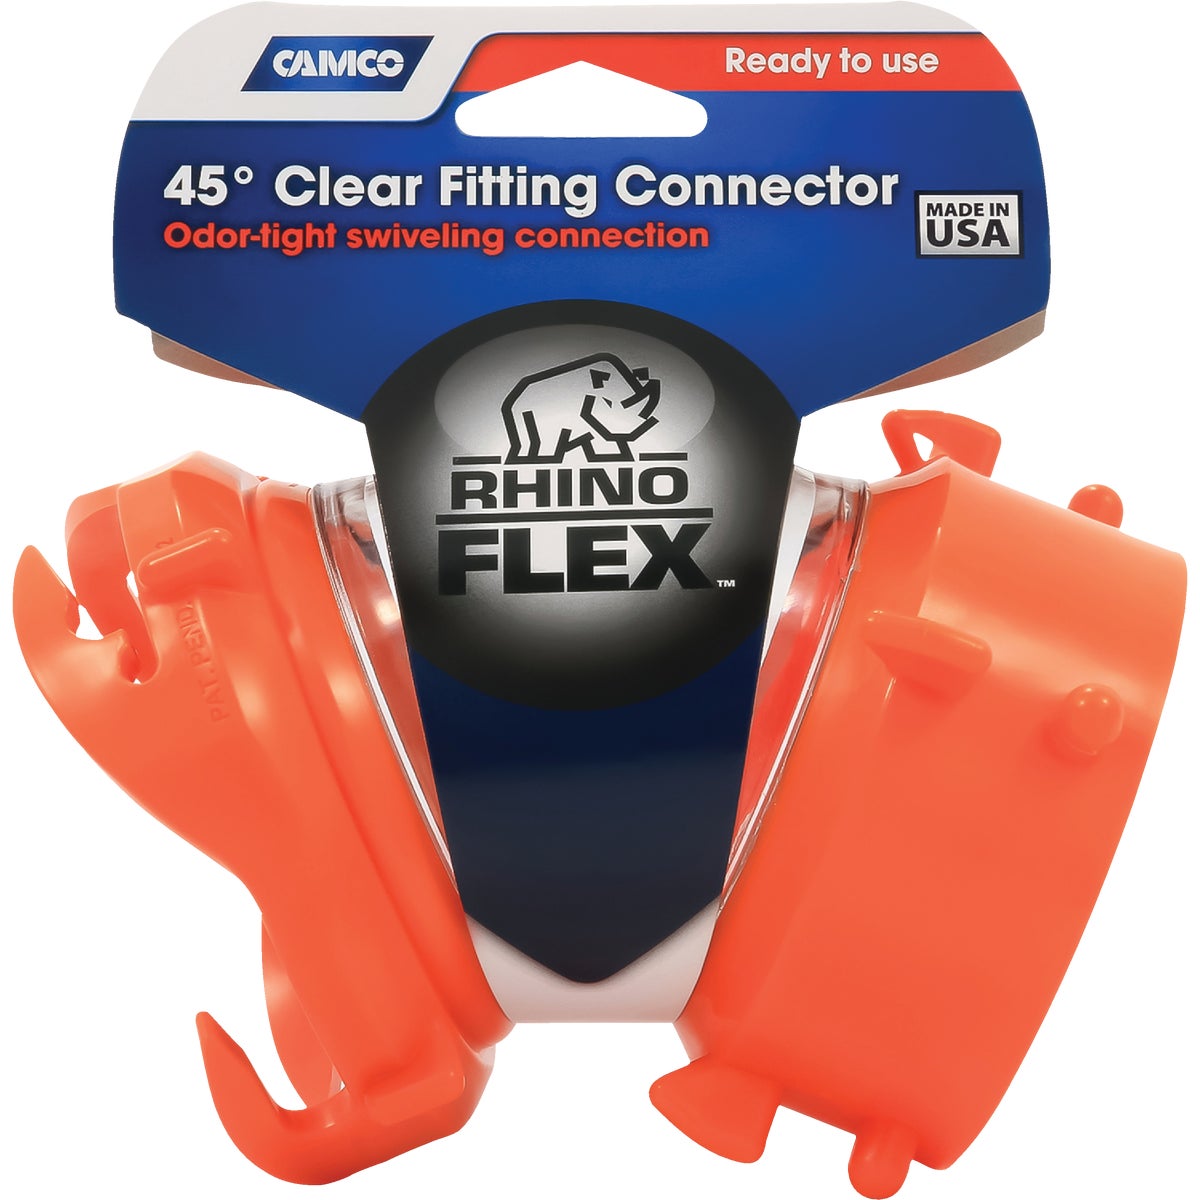 Item 570568, RhinoFLEX 45 degree clear sewer hose swivel fitting connector has a swivel 